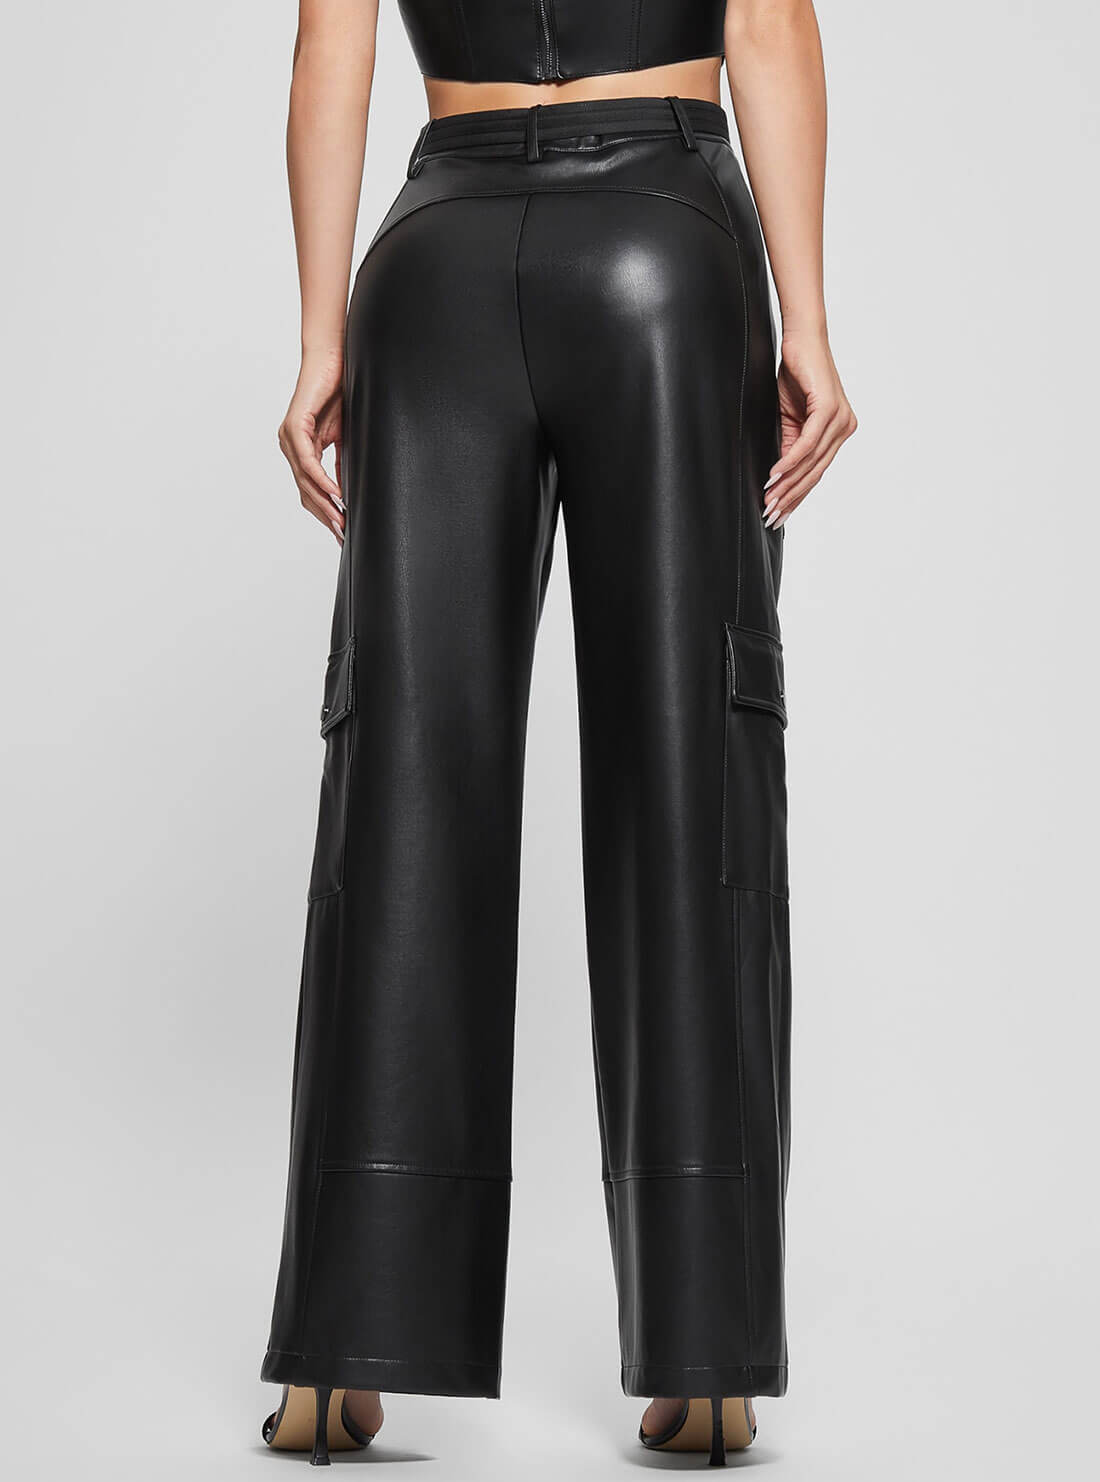 Black Gwen Leather Cargo Pants | GUESS Women's Apparel | back view